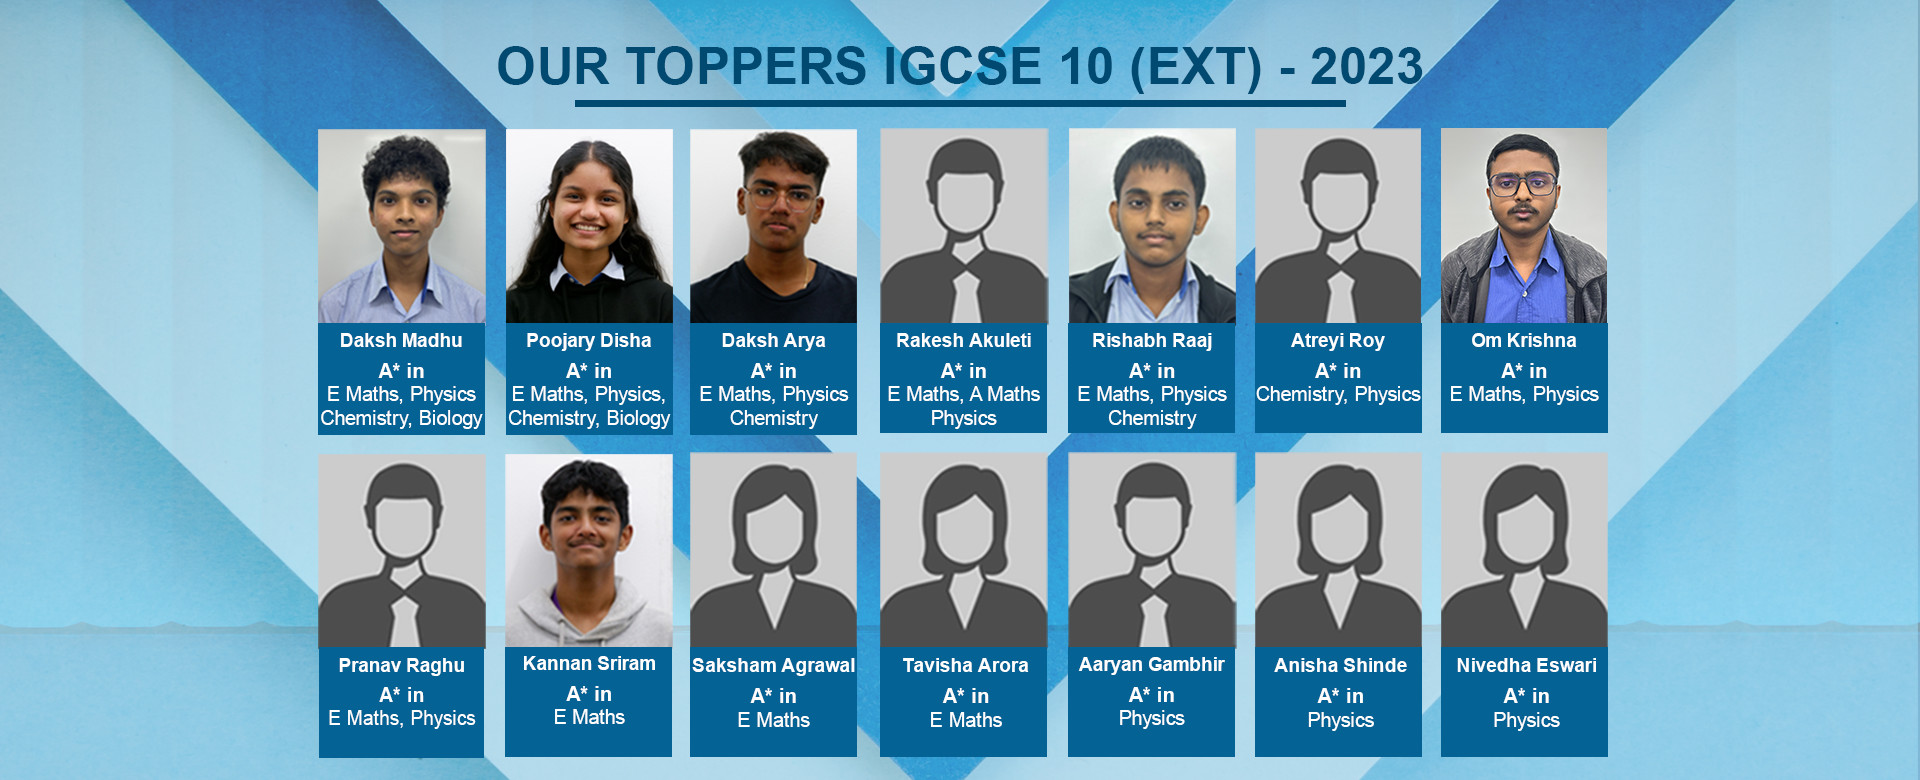 IGCSE 10 E-Maths Toppers - 2023